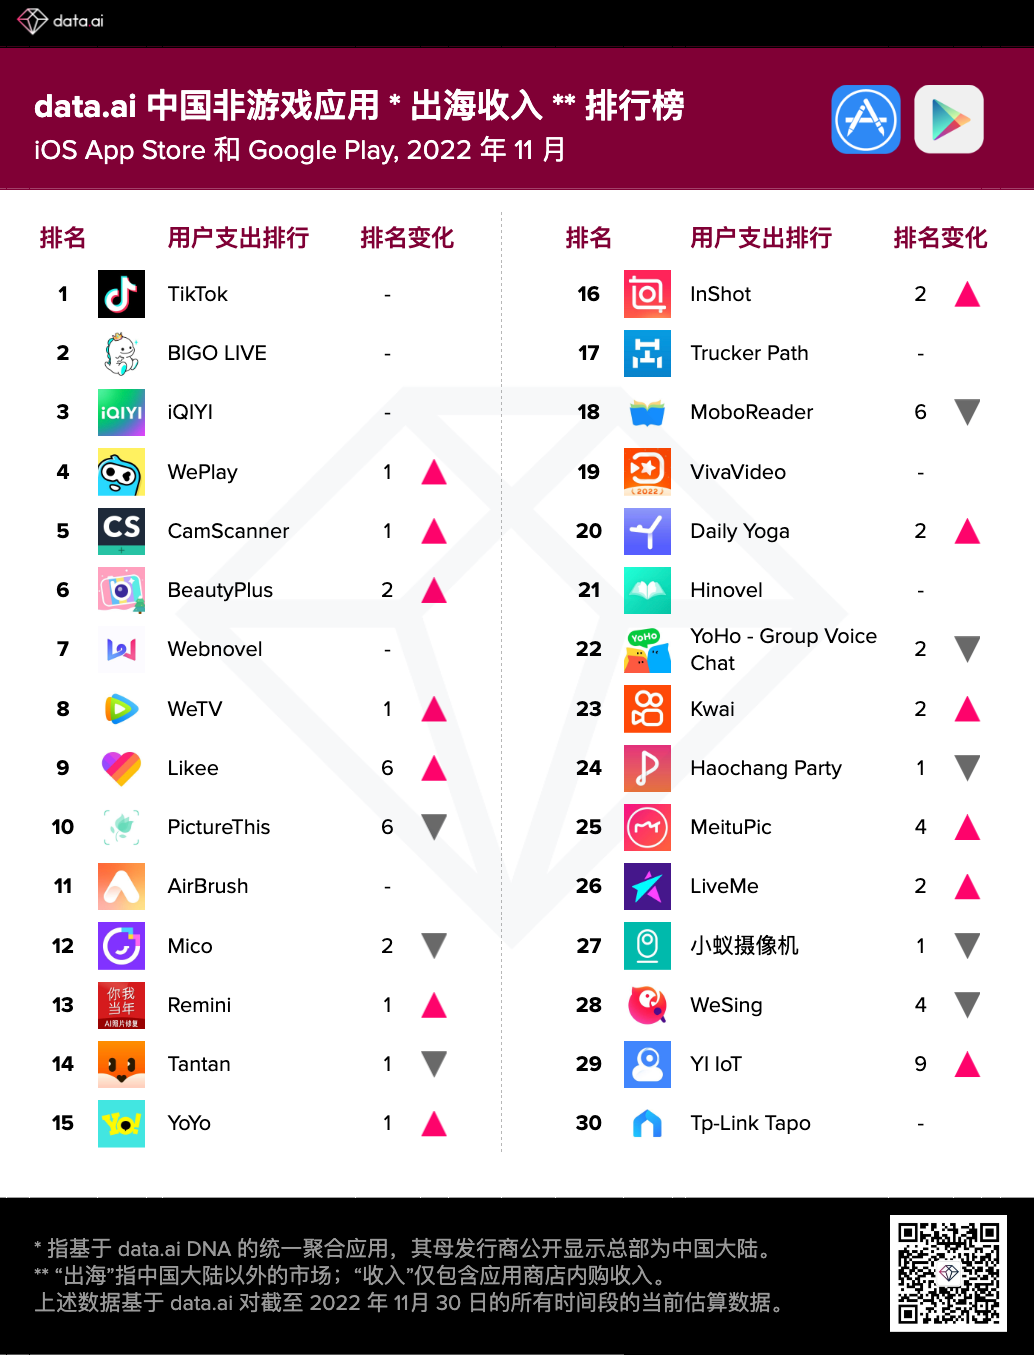 data.ai：字节跳动、欢聚集团(YY.US)、腾讯(00700)为11月中国非游戏厂商及应用出海收入排行榜前三